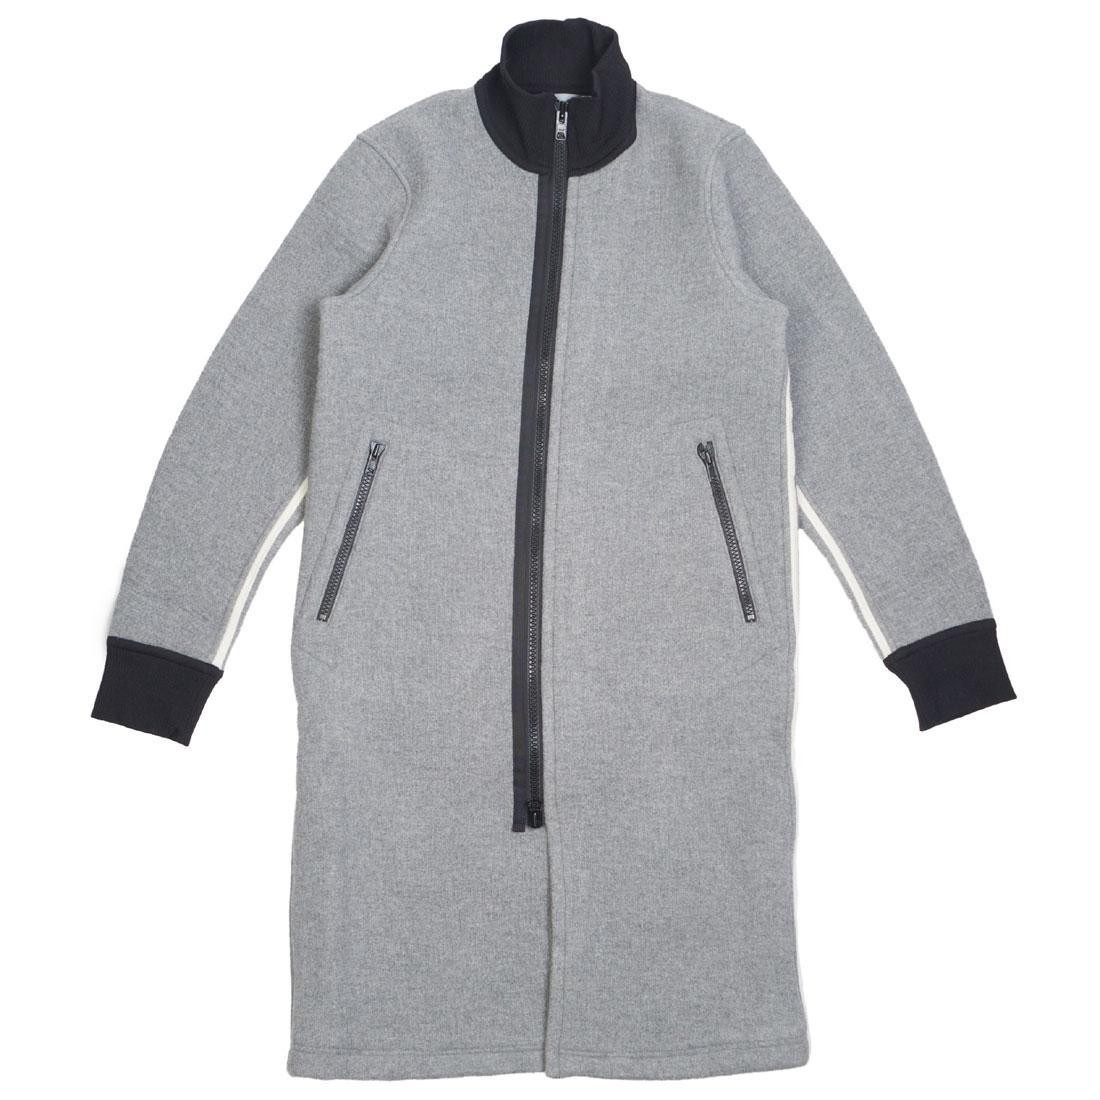 Adidas Y-3 Men Spacer Wool Coat gray grey heather off white black